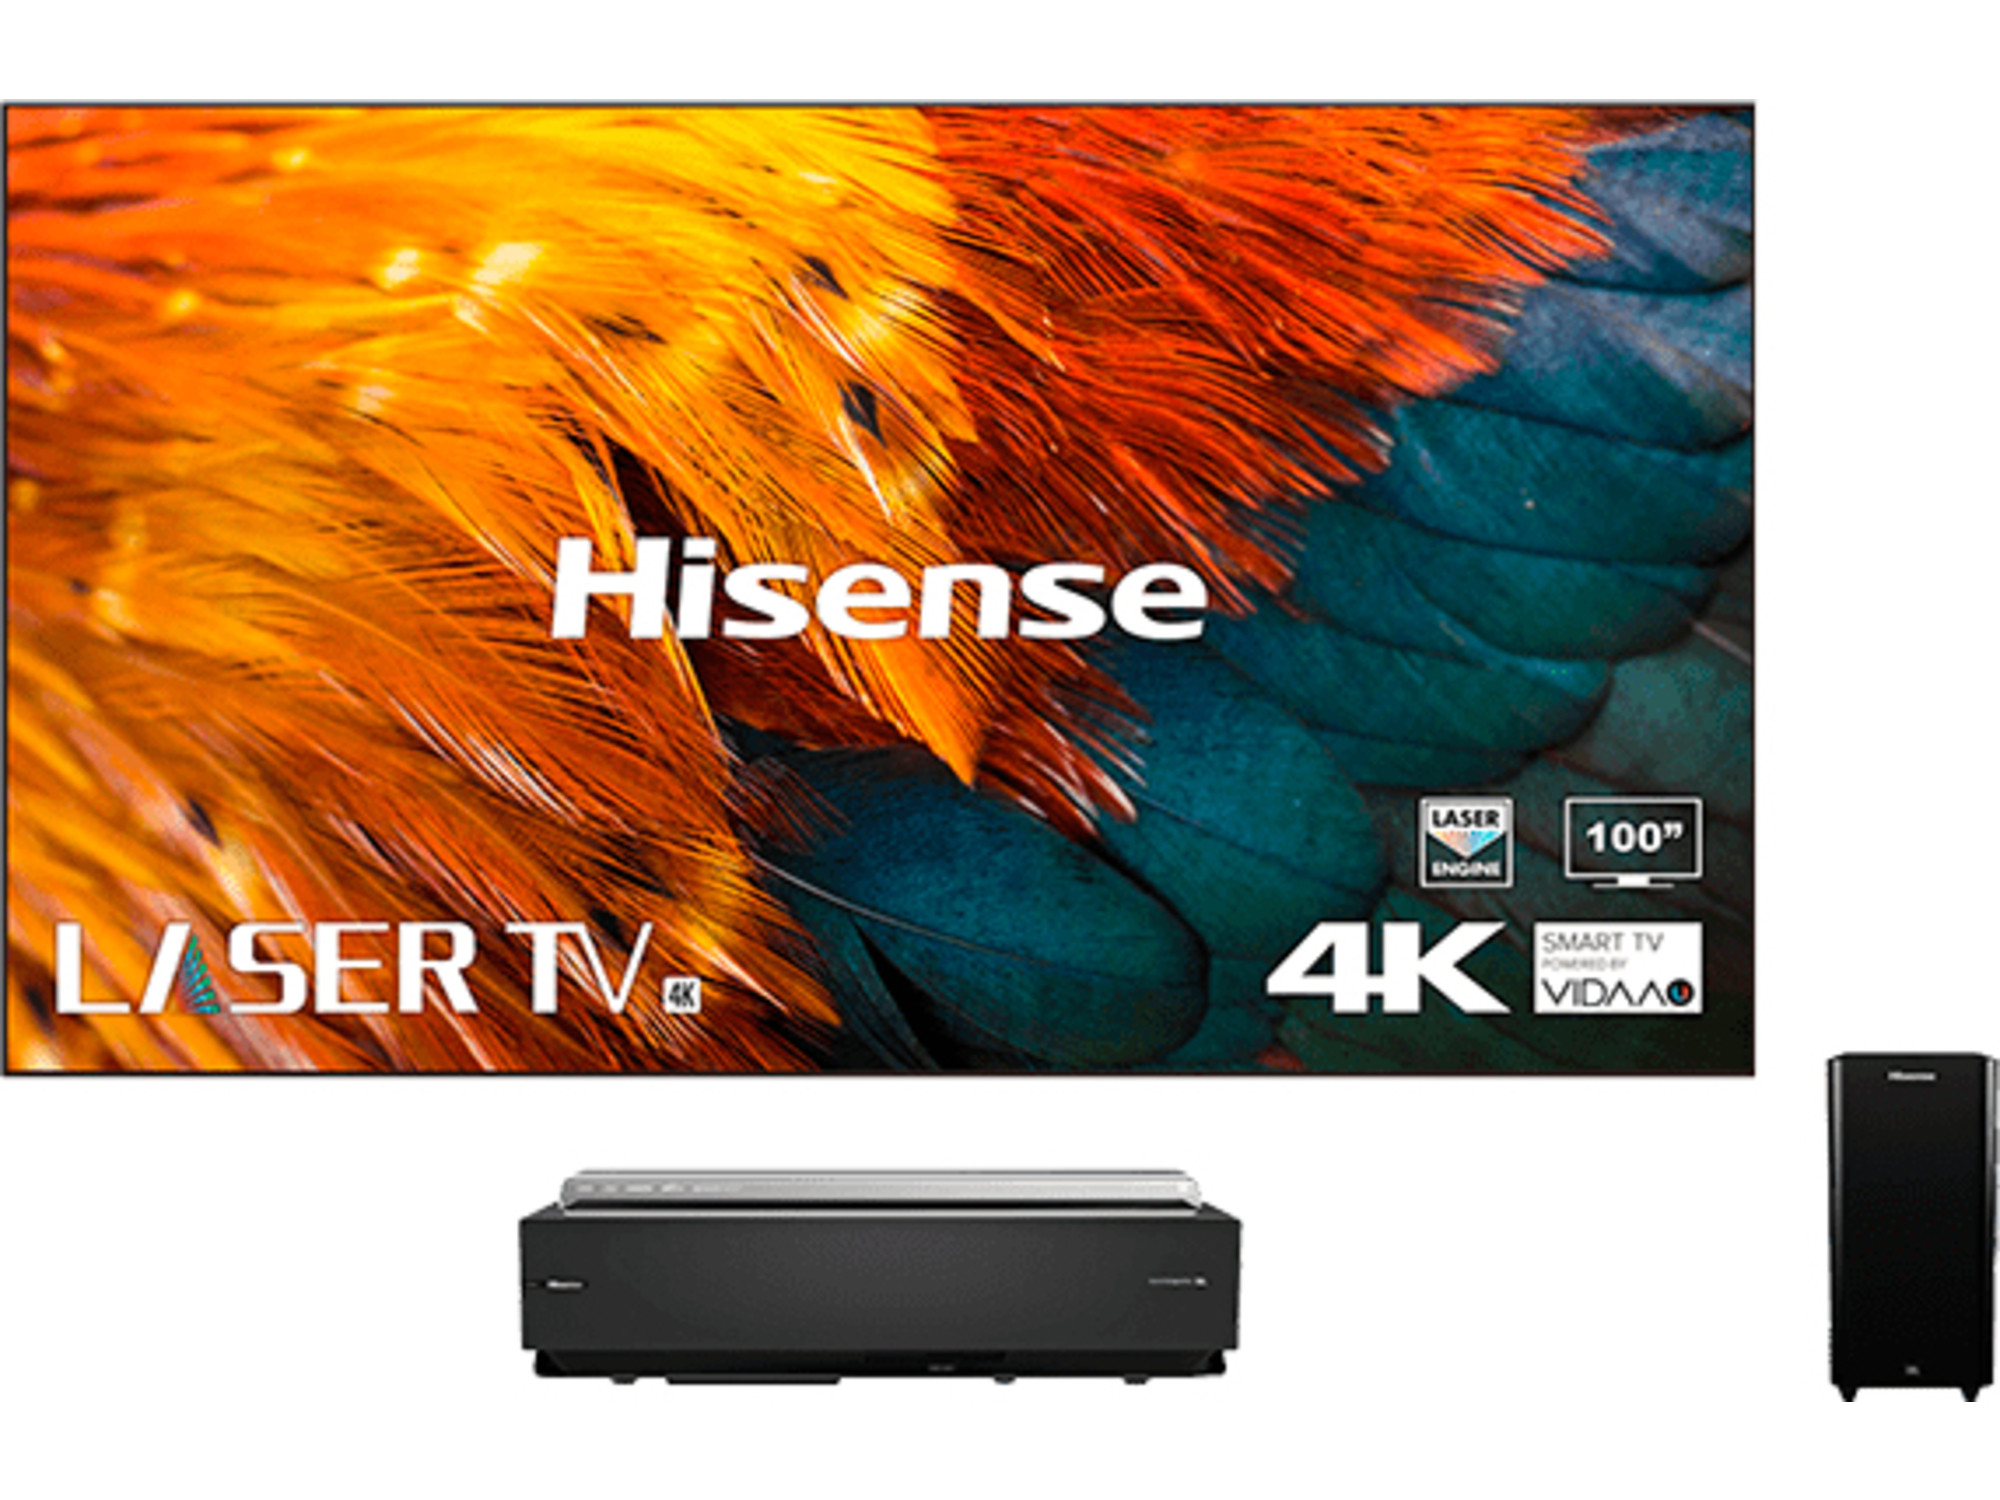 Hisense Laser tv 100 inch UHD H100LDA